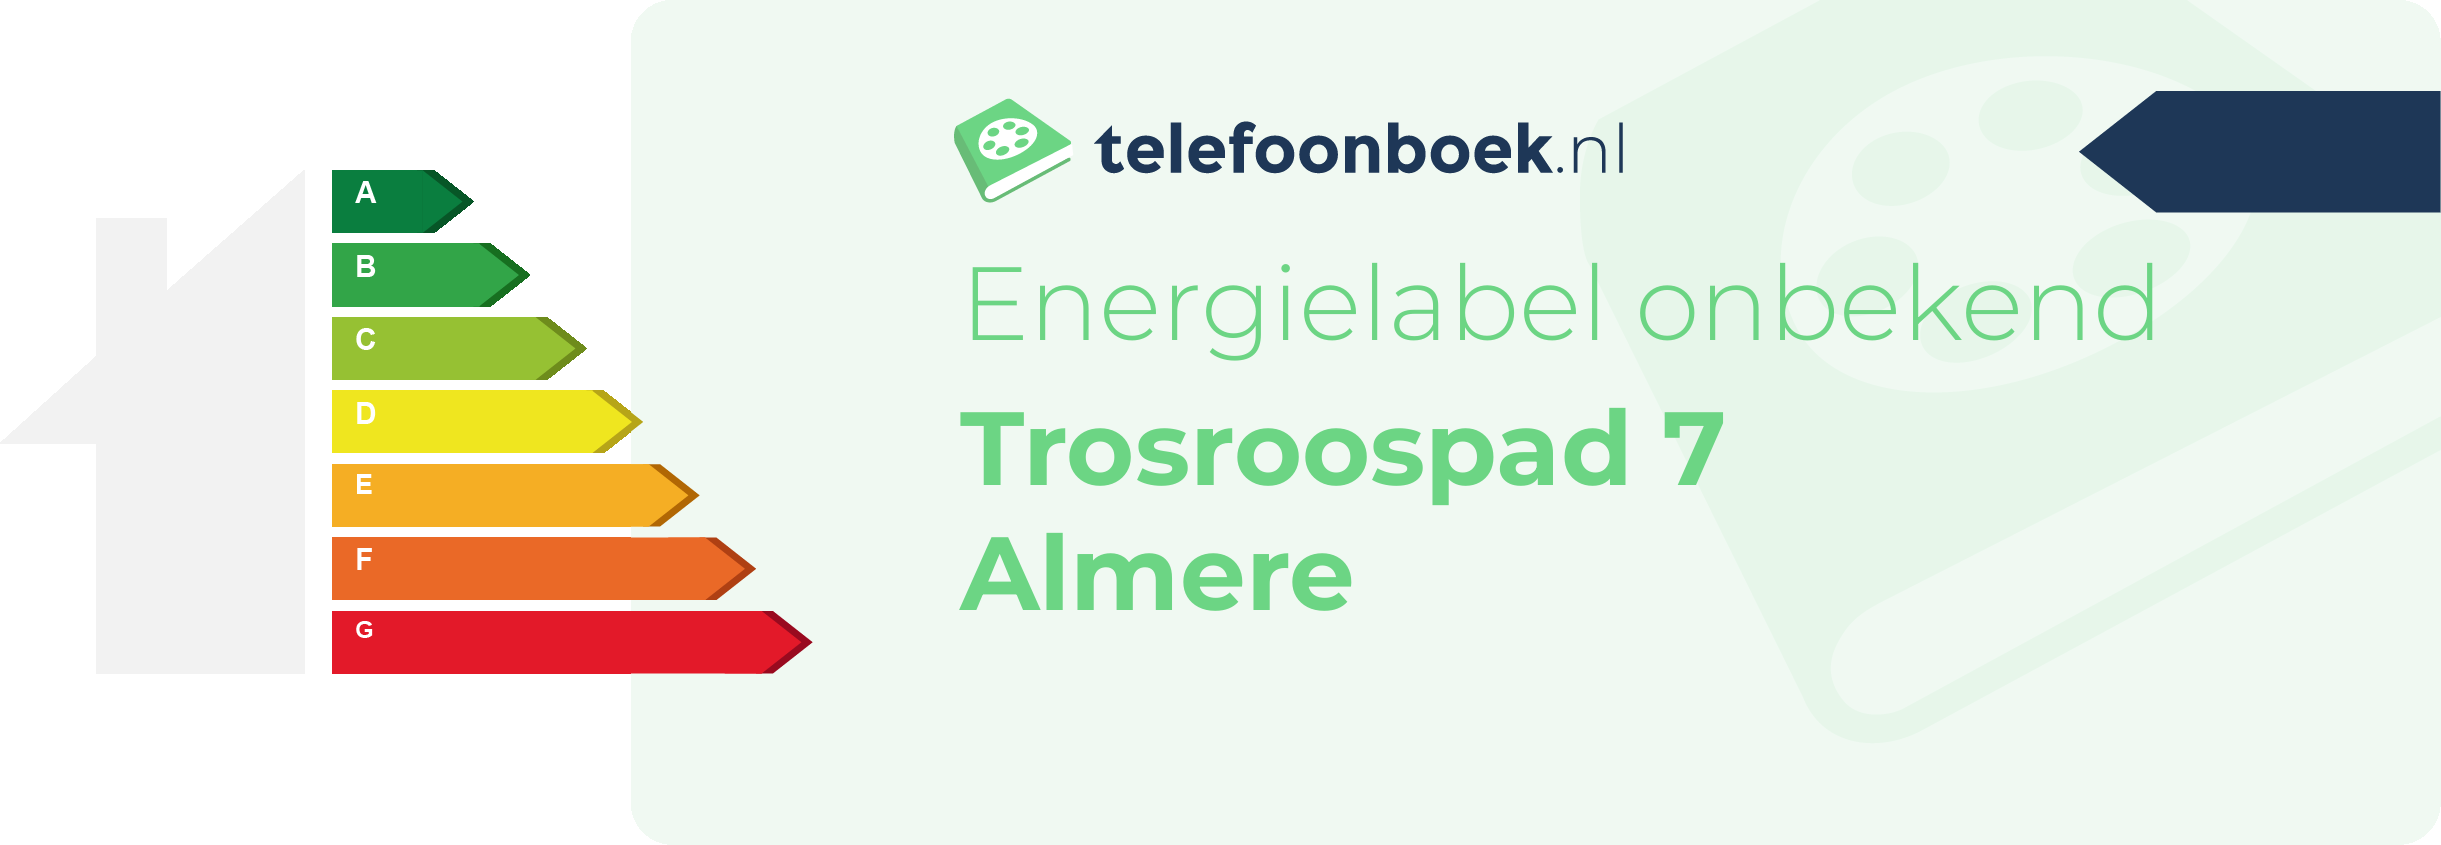 Energielabel Trosroospad 7 Almere